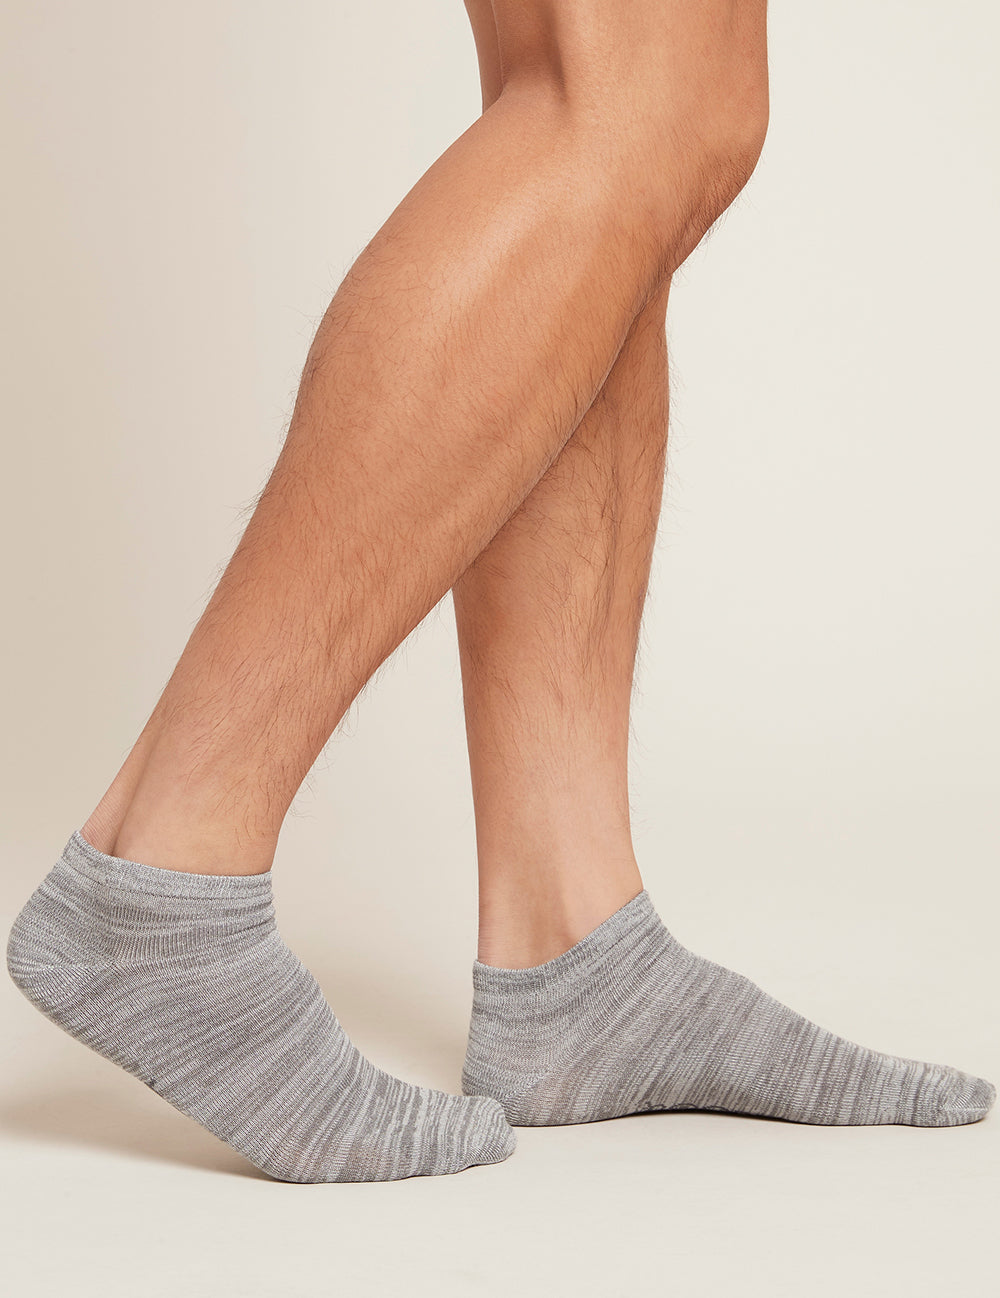 Men's Low Cut Socks, Bamboo Socks For Men